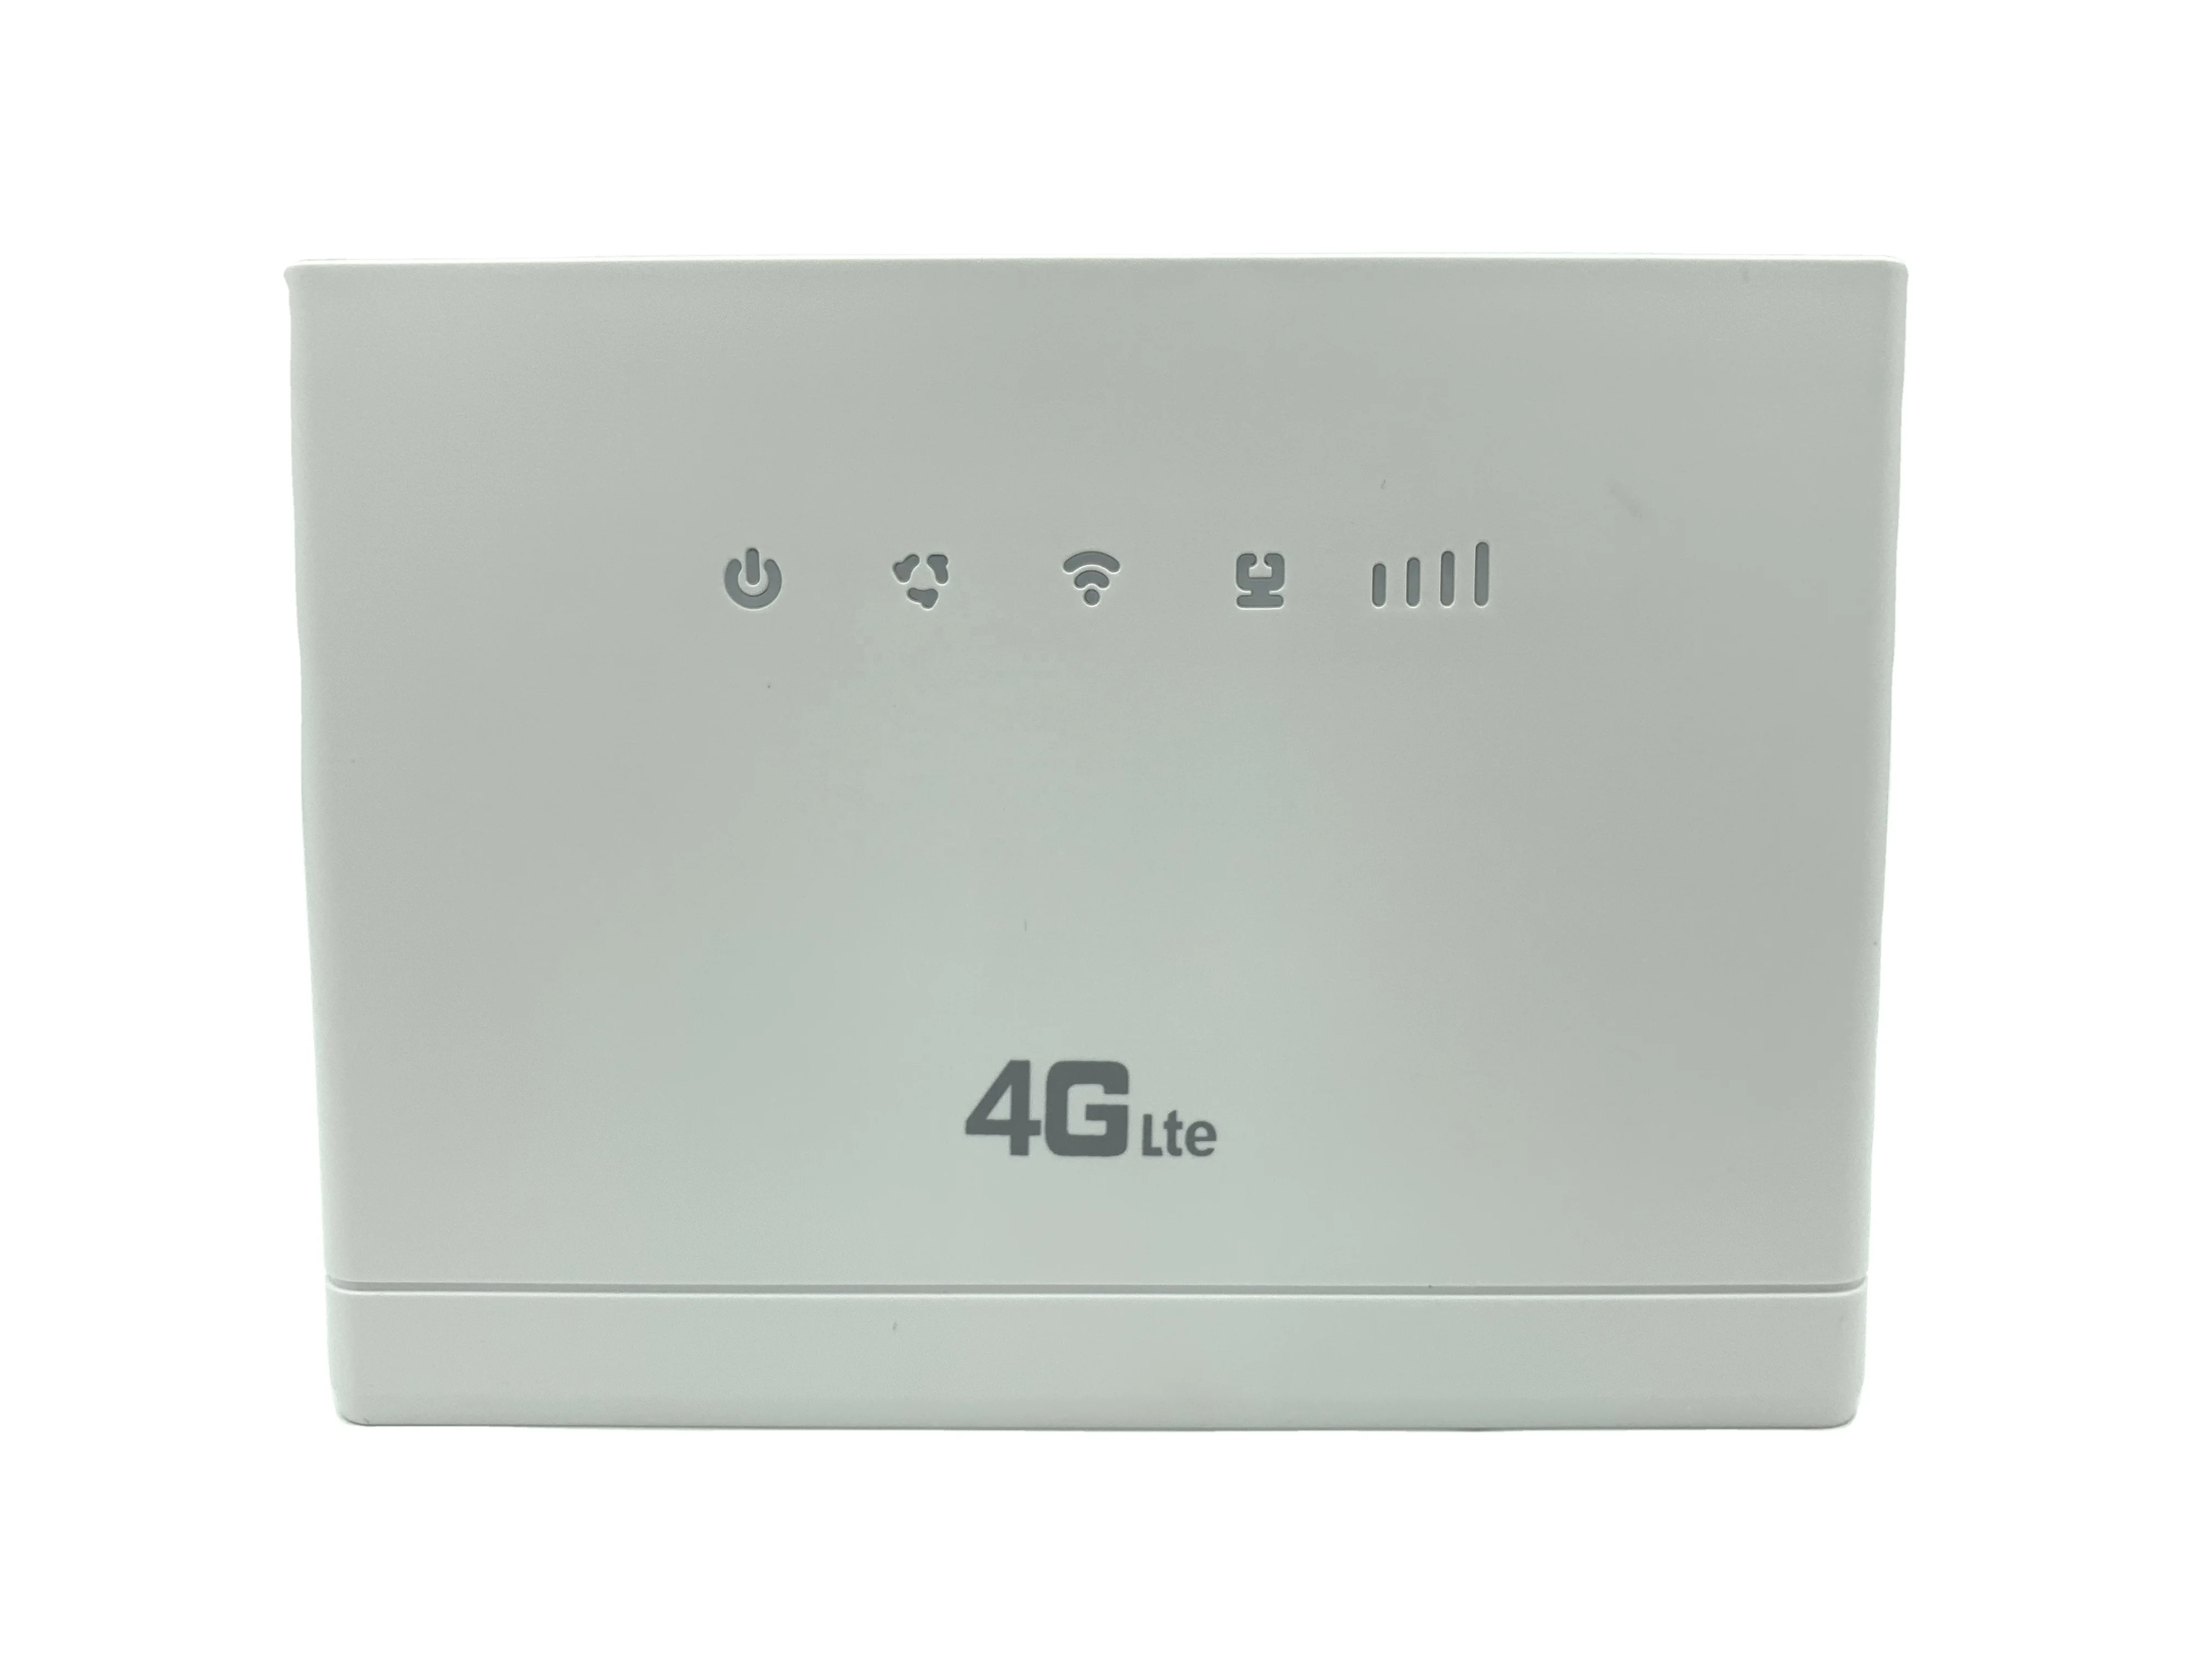 3g/4g-cpe Lte Wireless Router 3000mah 300mbps Mobile Hotspot Modem Sim ...